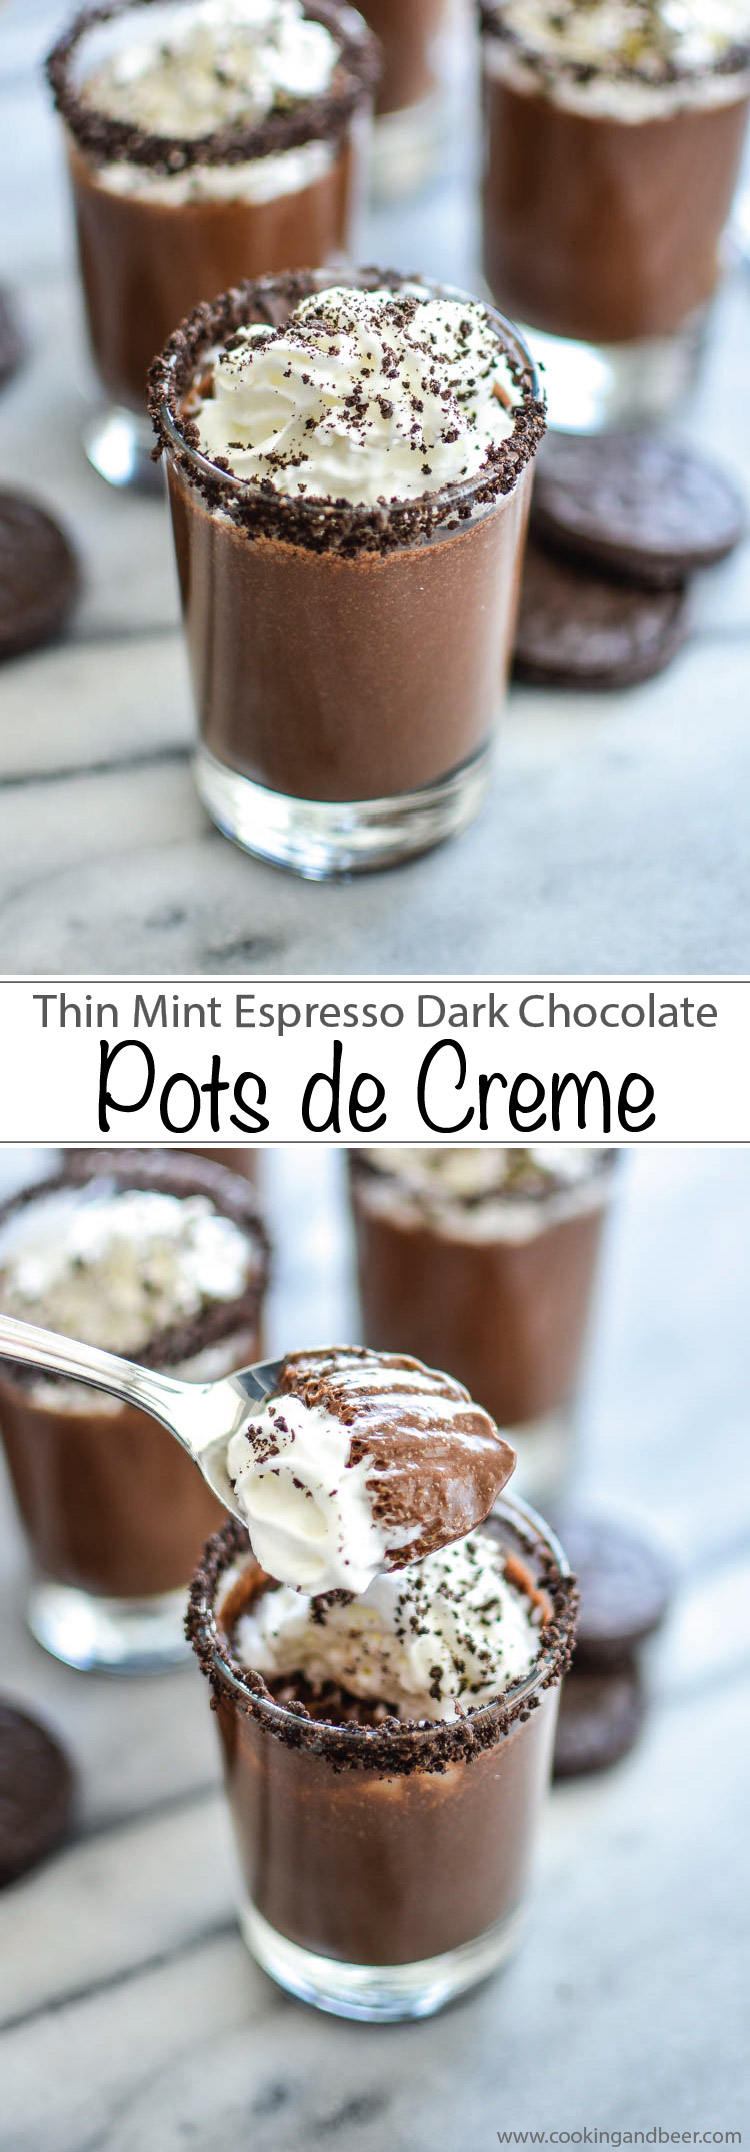 Thin Mint Dark Chocolate Espresso Pots de Creme Recipe is the perfect sweet indulgence!! | www.cookingandbeer.com